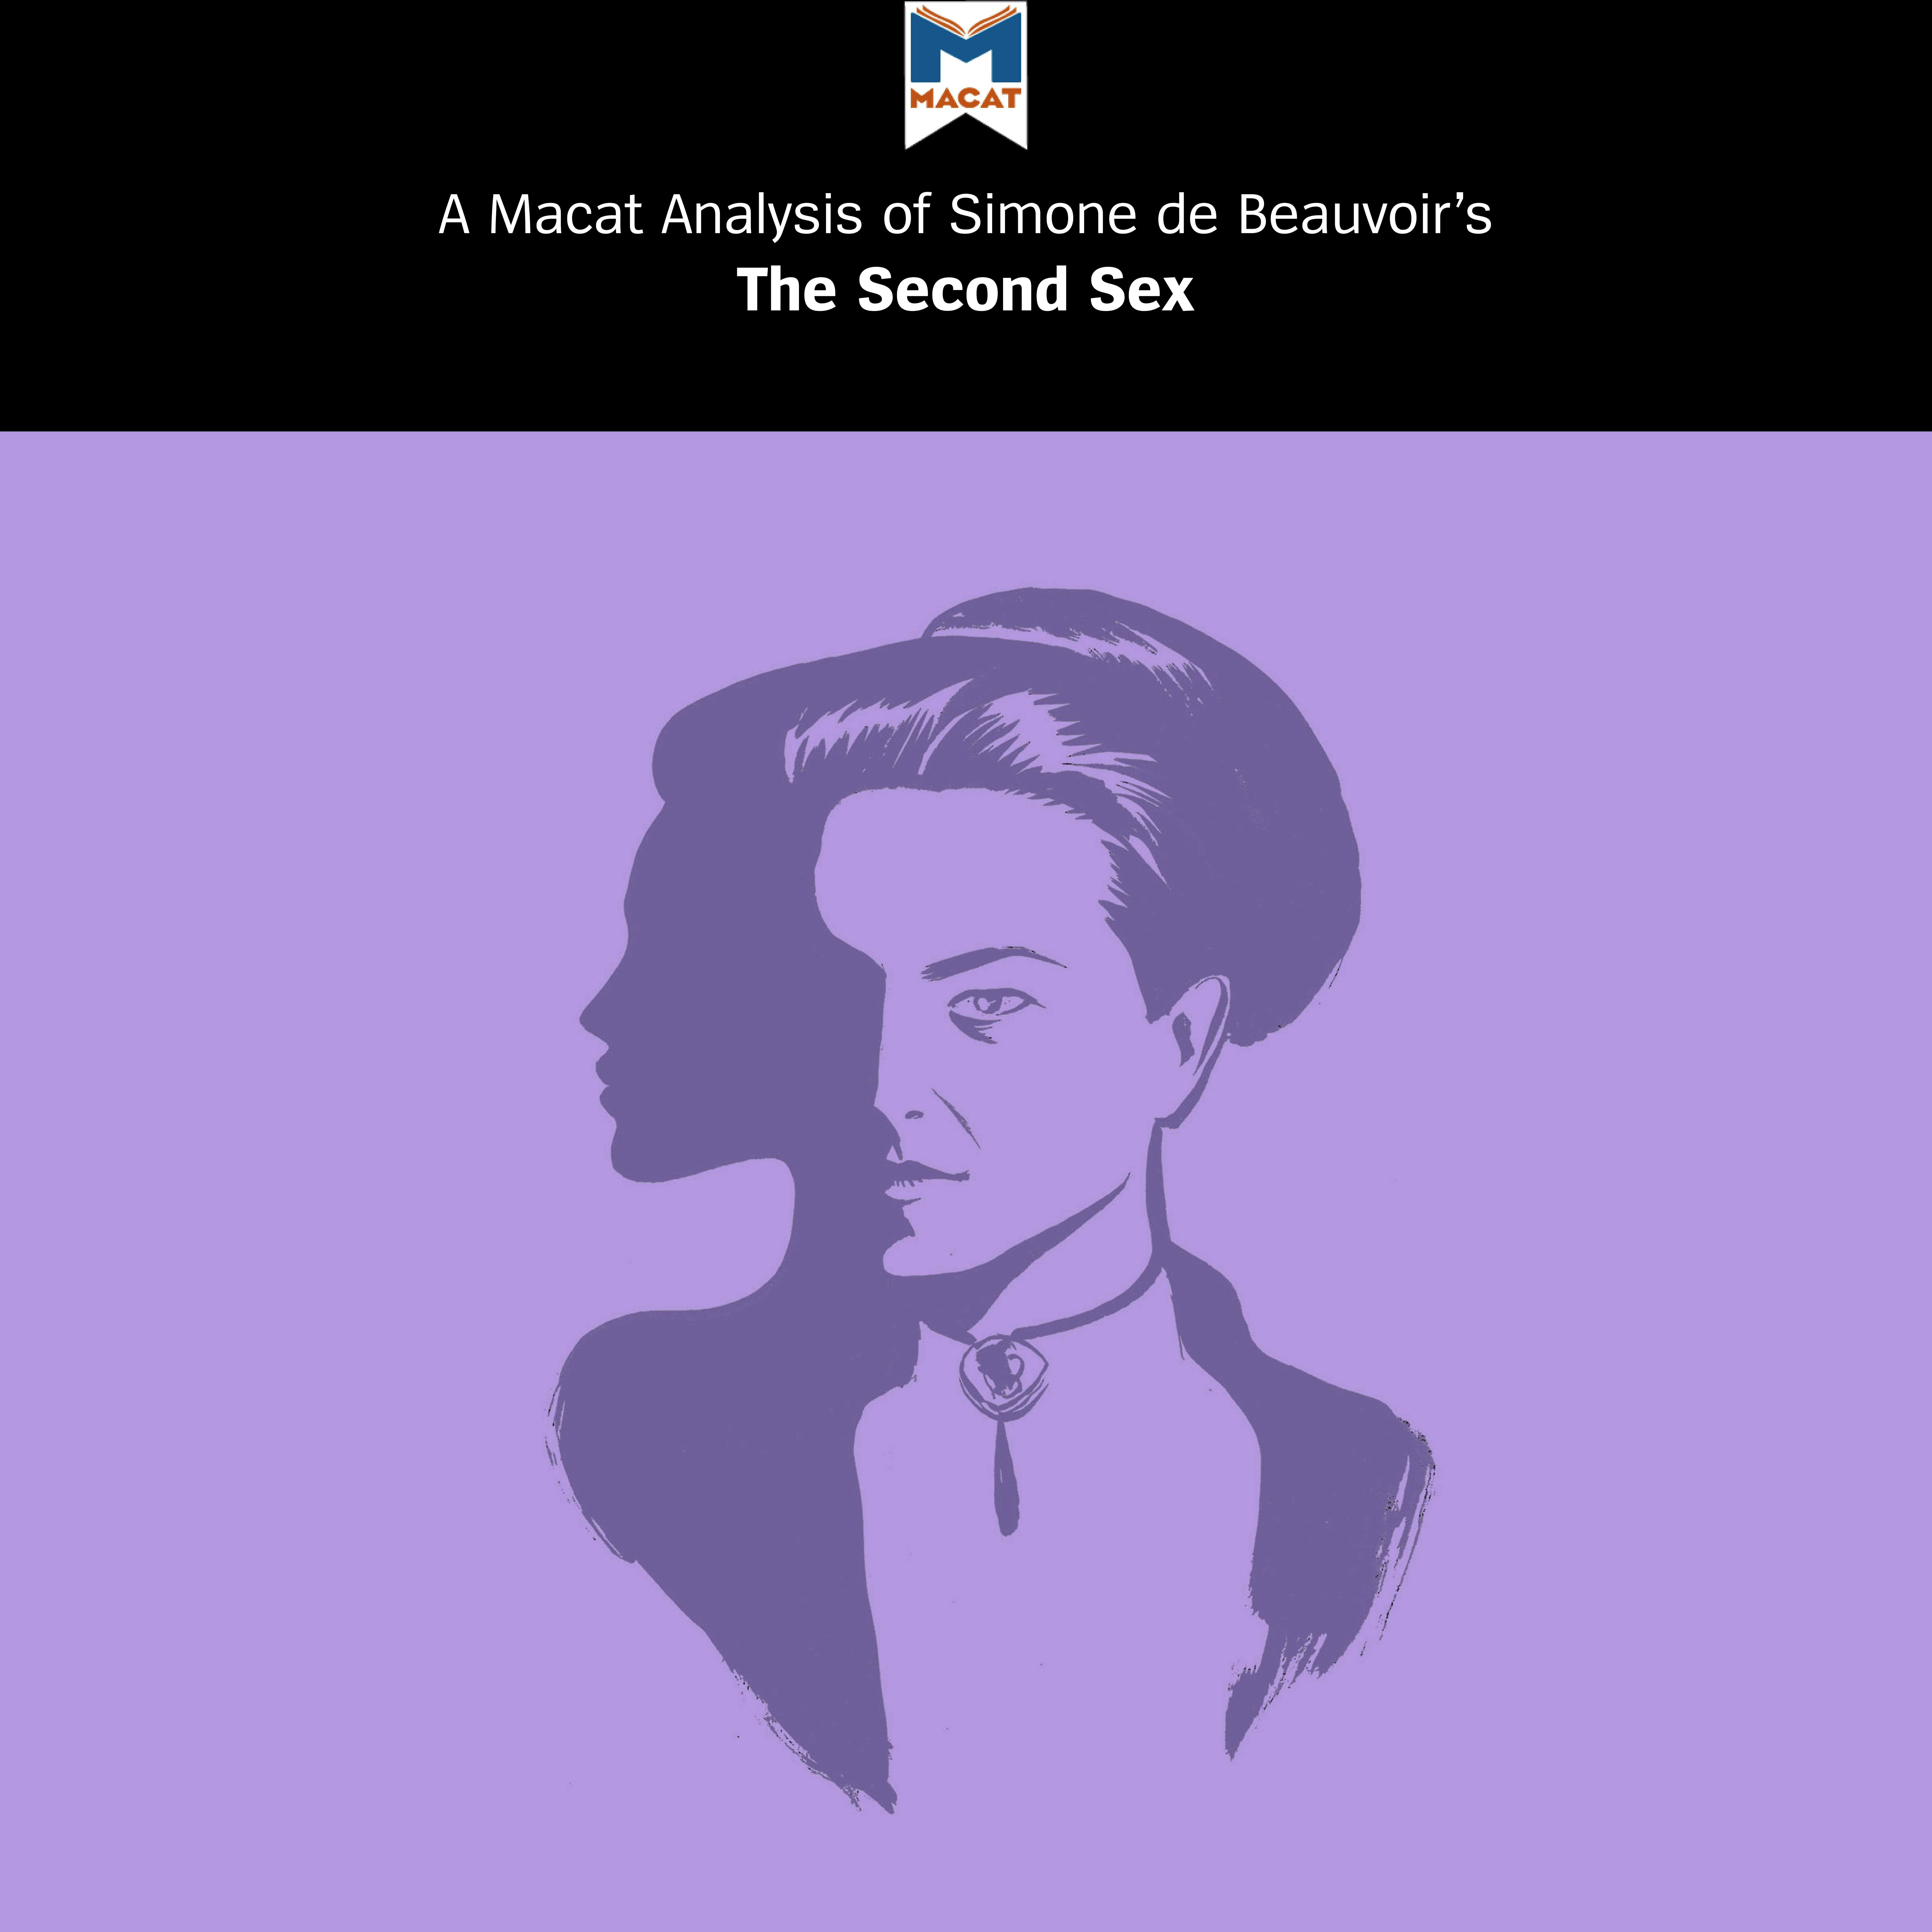 A Macat Analysis of Simone de Beauvoir's The Second Sex - undefined